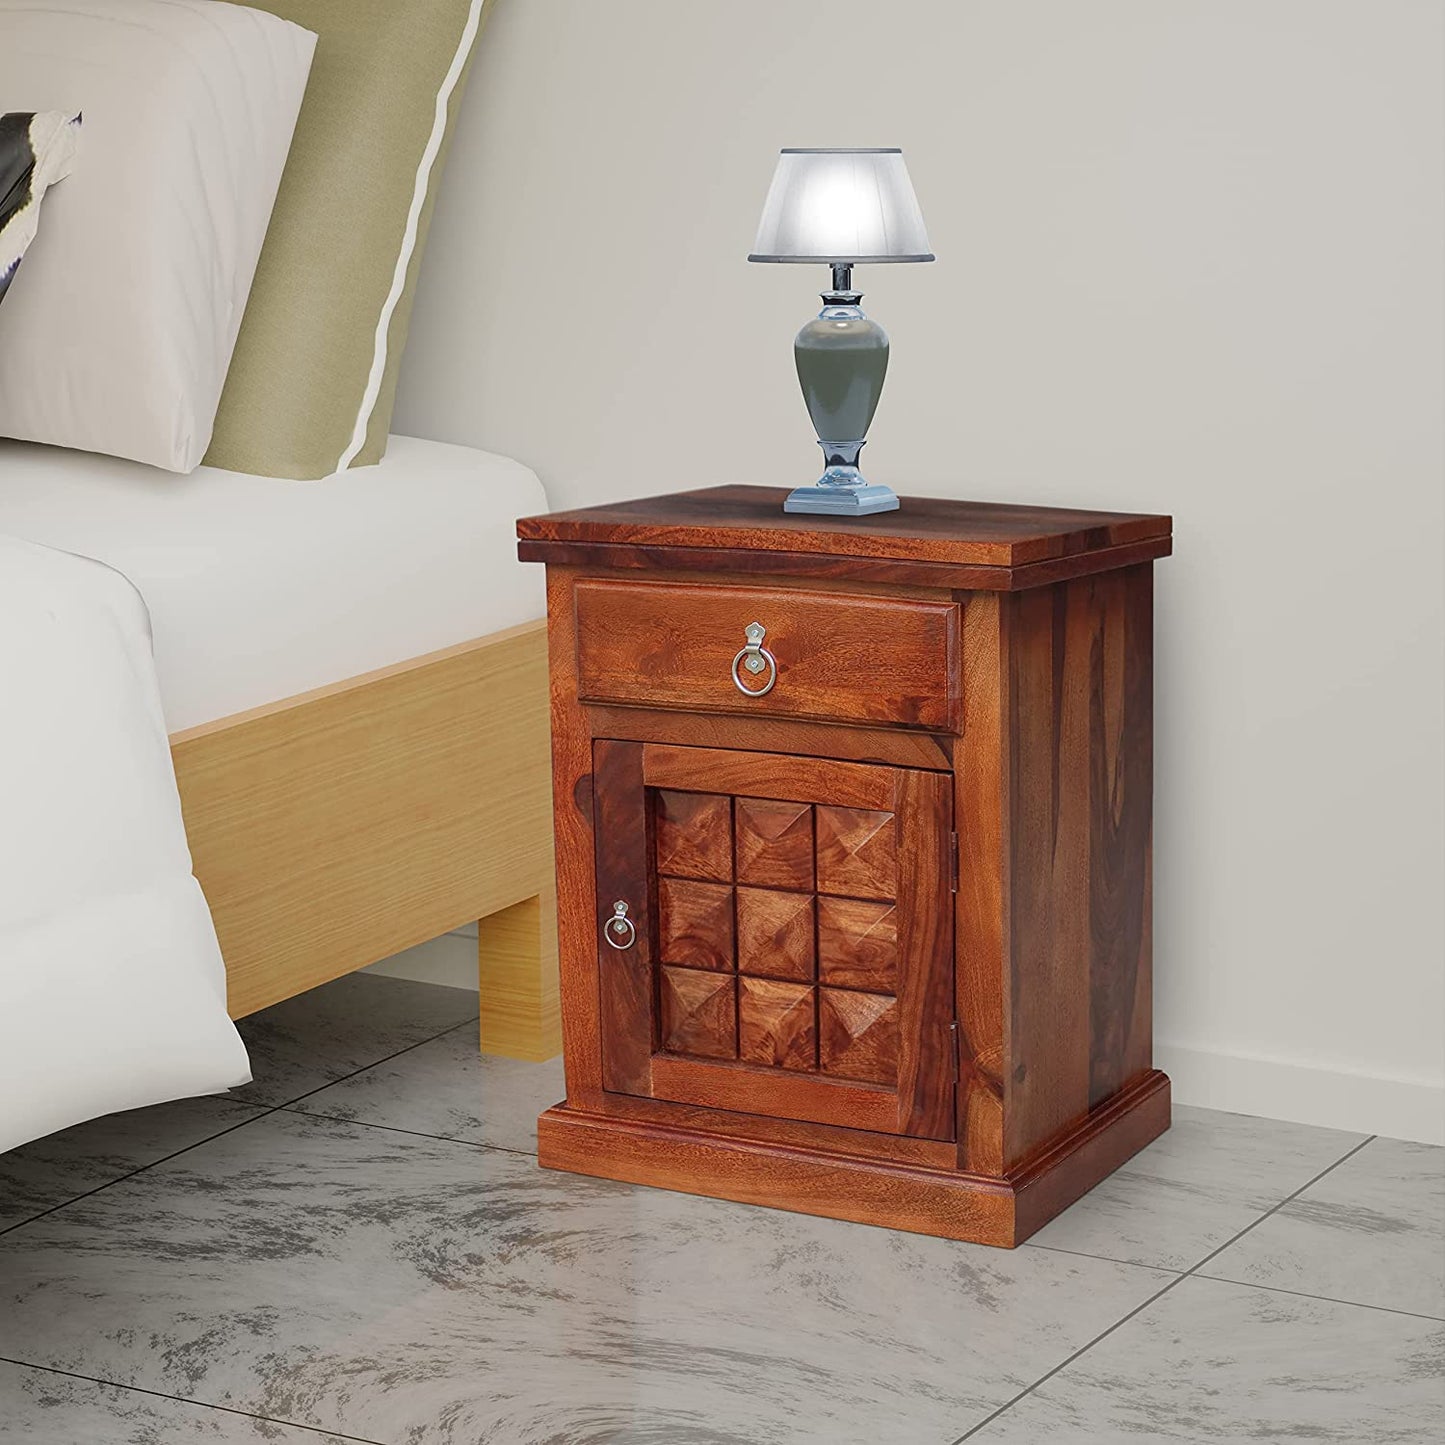 MoonWooden Wooden Bedside Table for Bedroom | Wooden Nightstand Lamp Table with 1 Drawer Storage | Sheesham Wood, Dark Honey